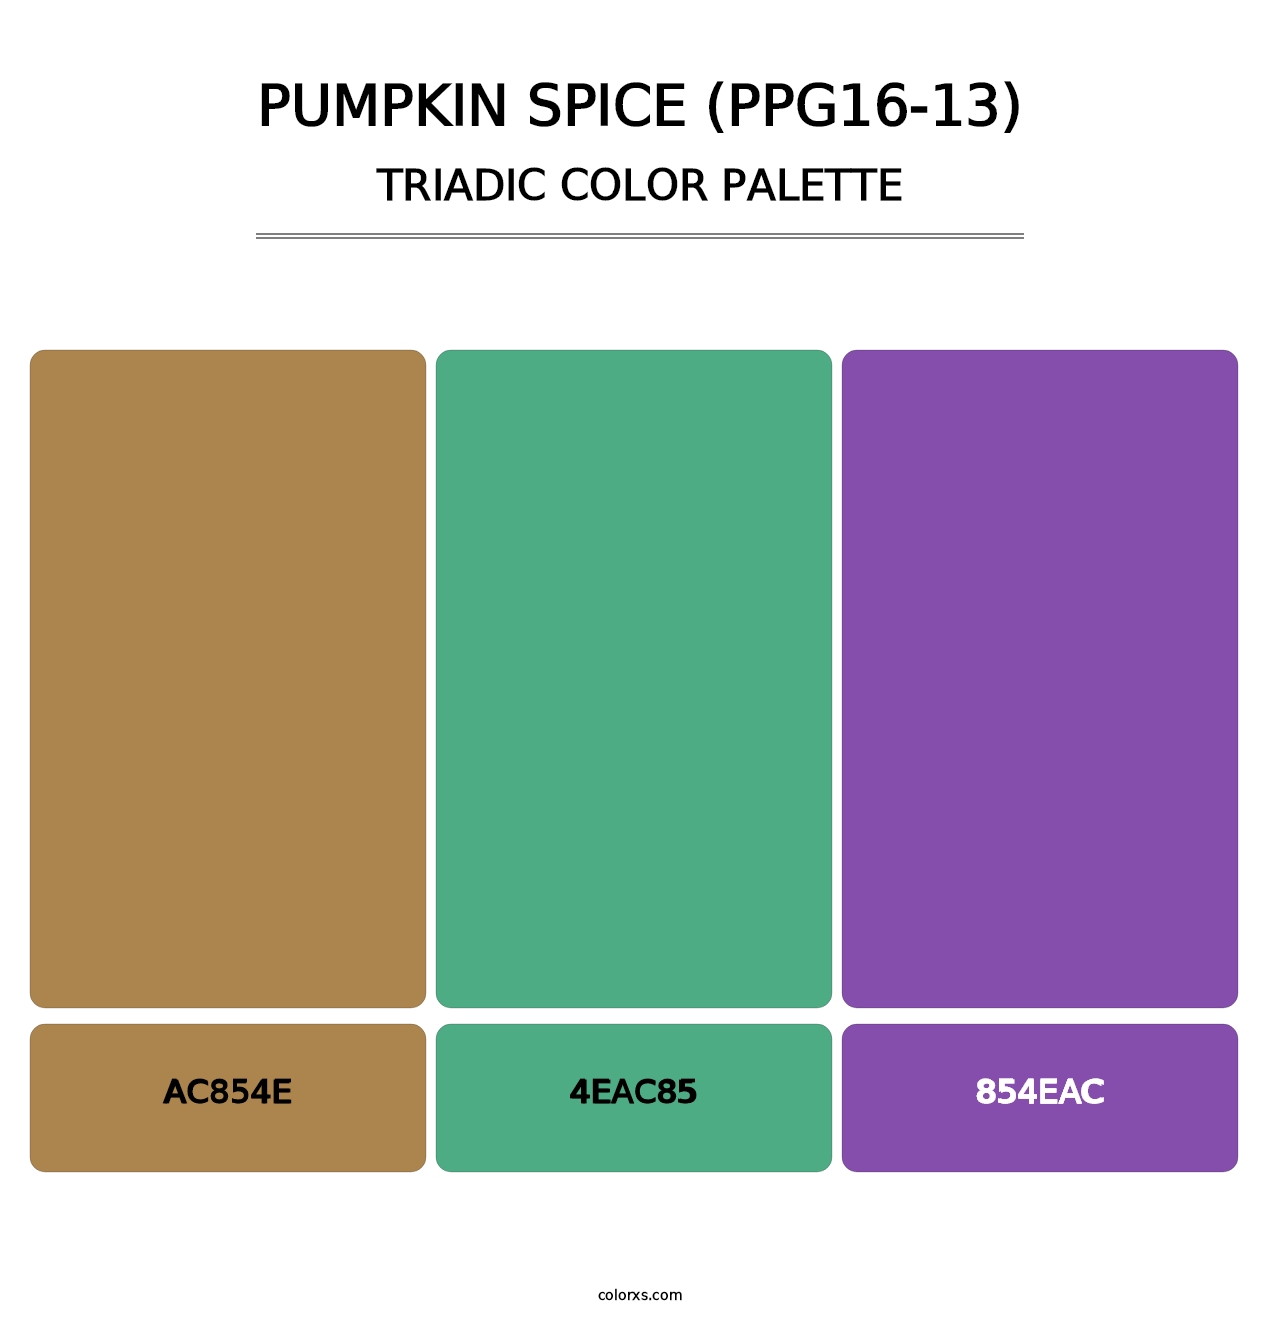 Pumpkin Spice (PPG16-13) - Triadic Color Palette